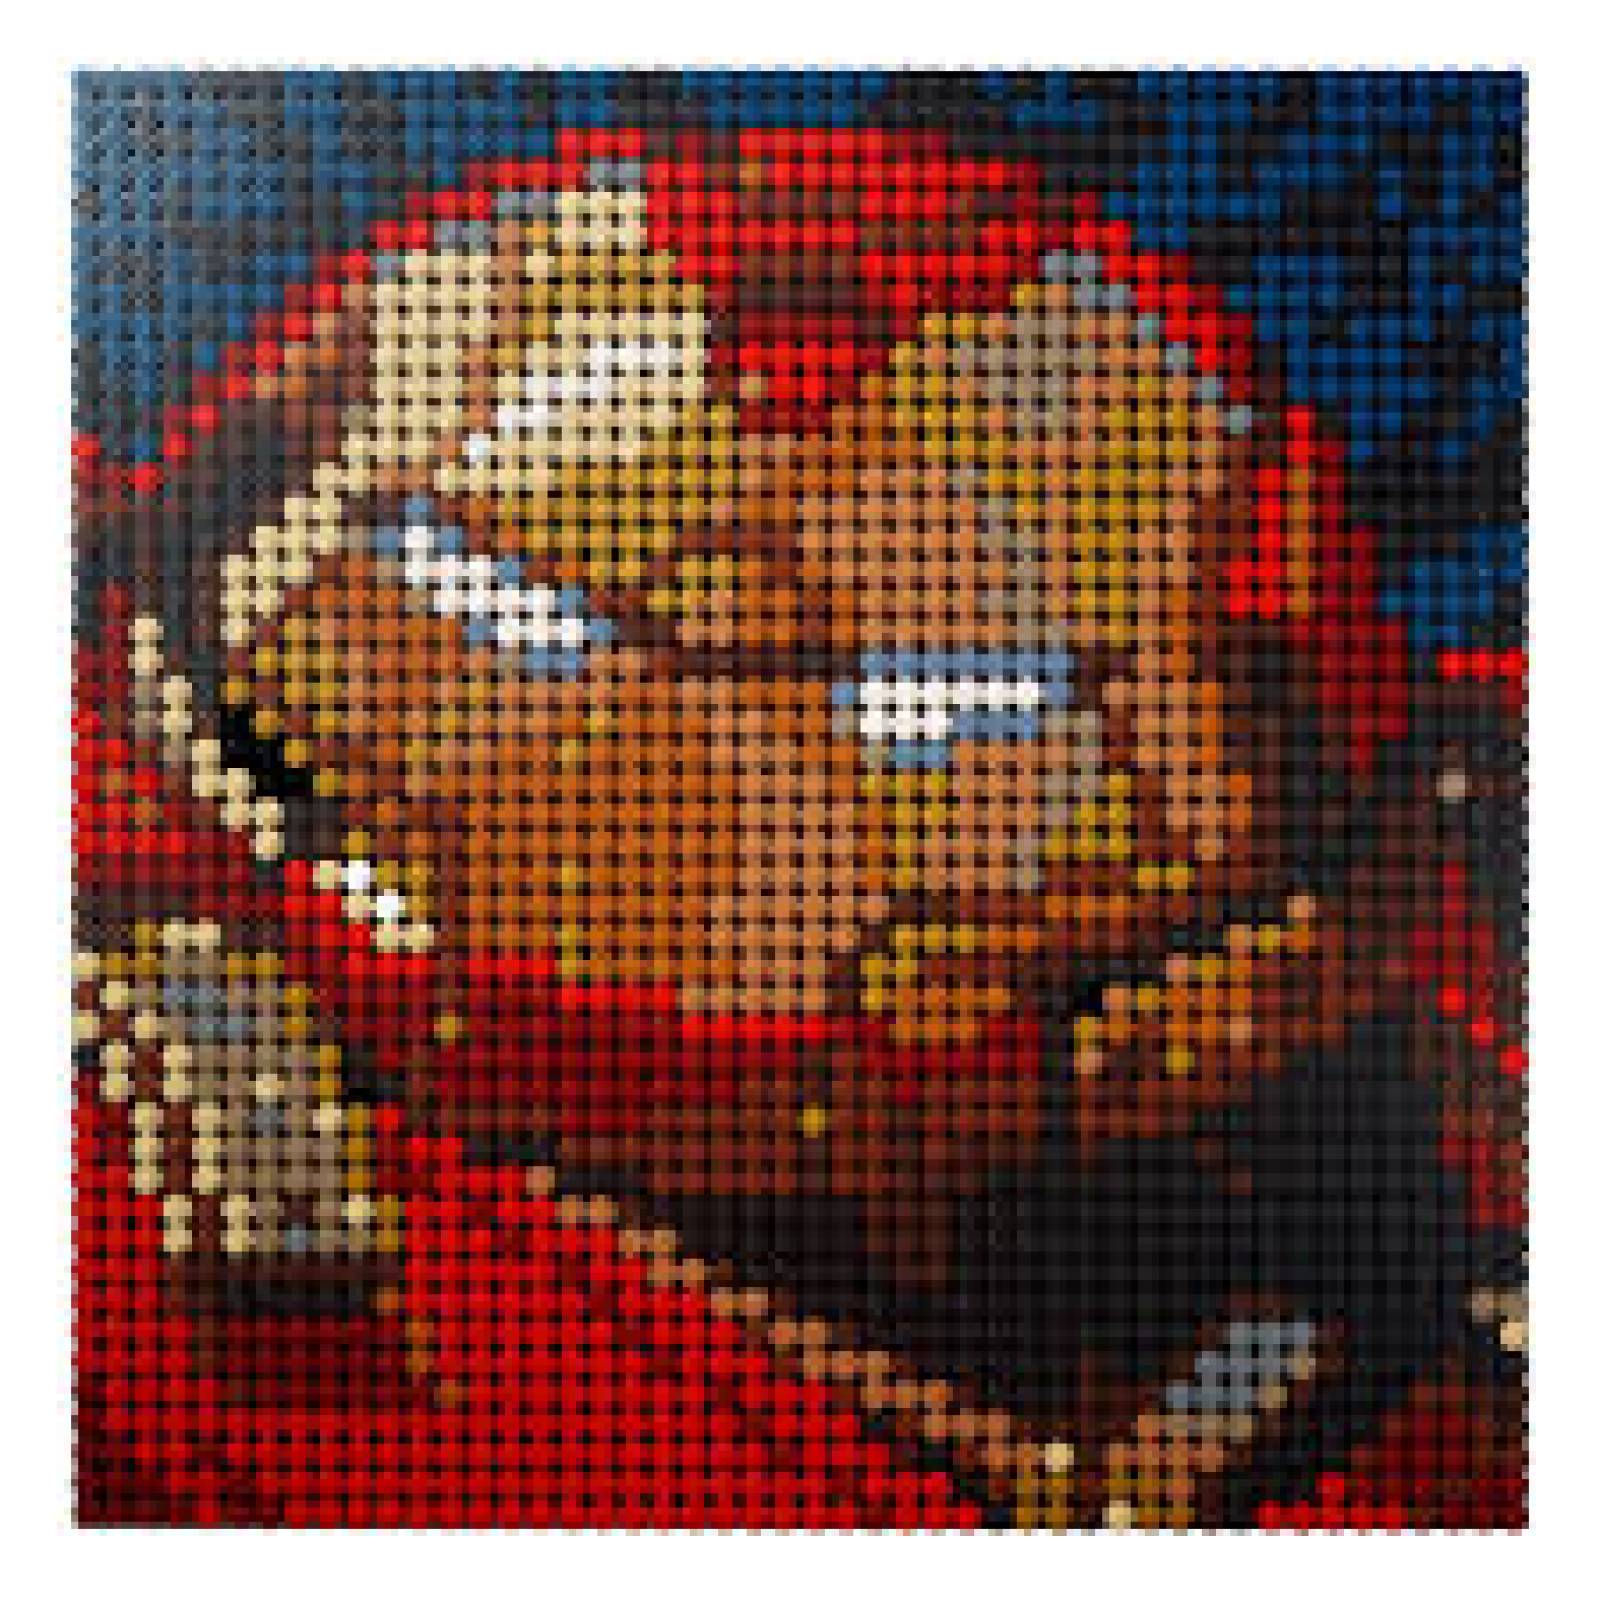 Lego 31199 Marvel Studios Iron Man